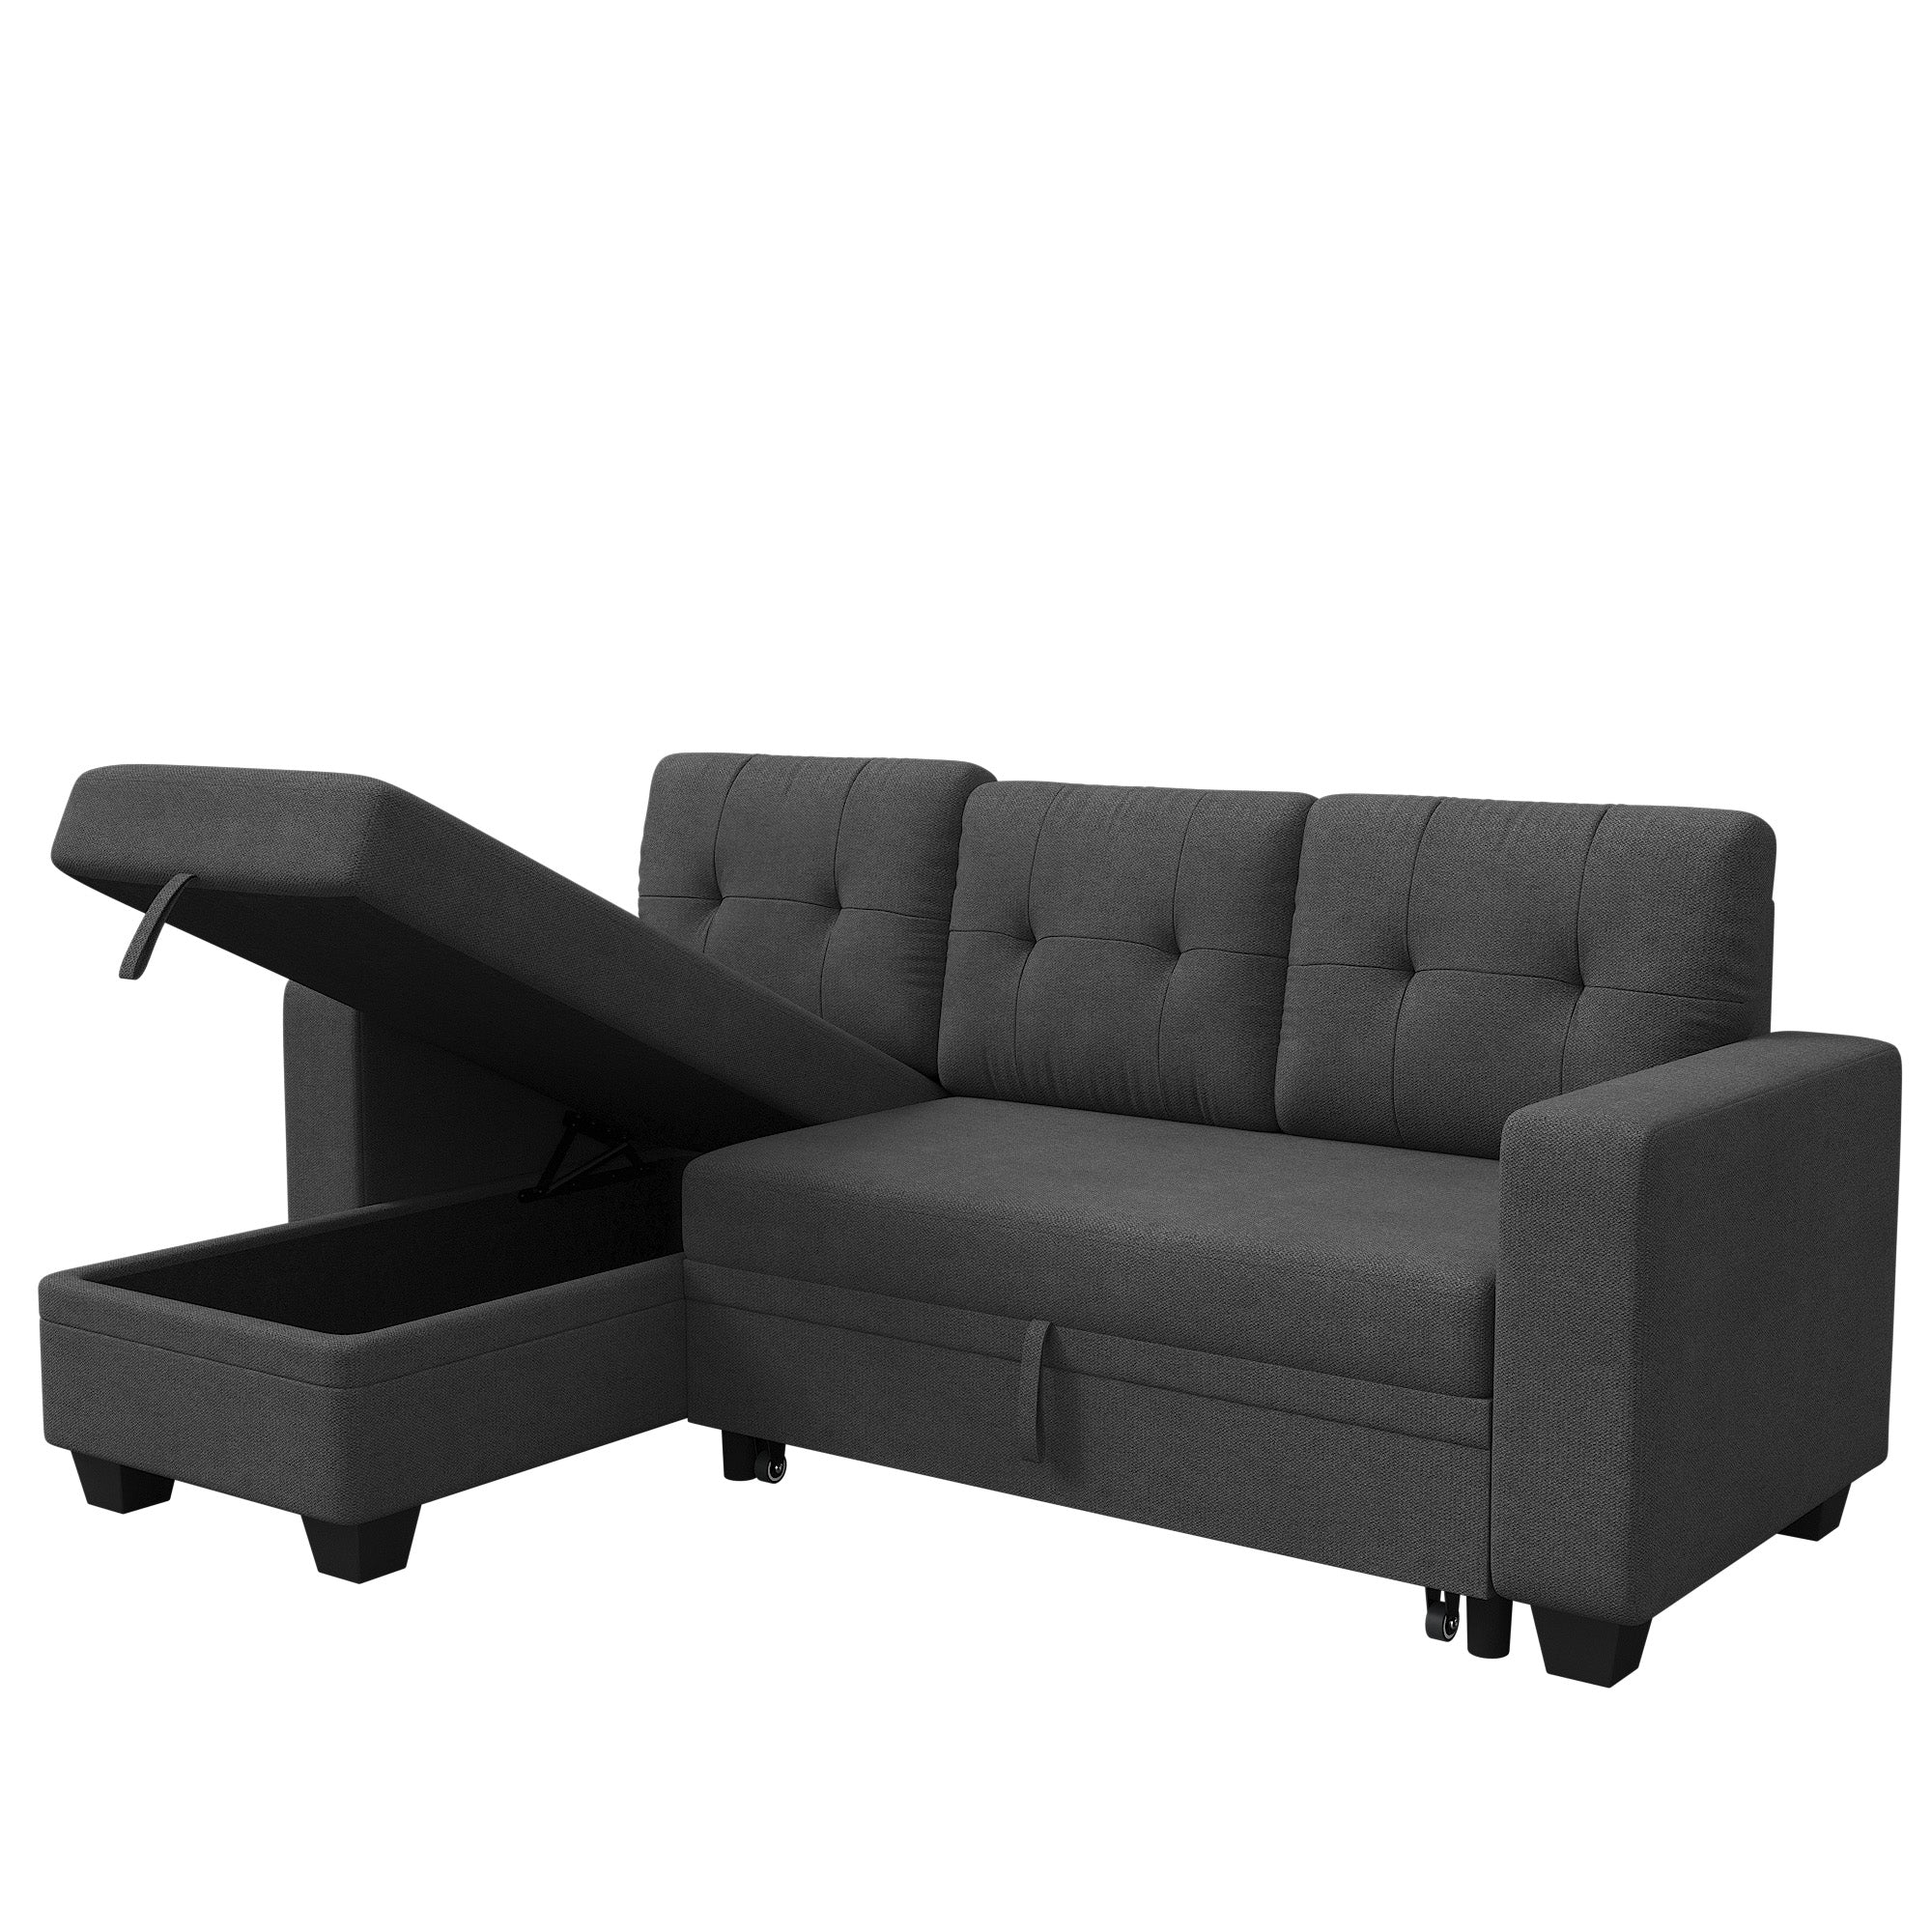 Homall L-Shaped Sofa Foldable Sofa Bed Reversible Sleeper Sectional So